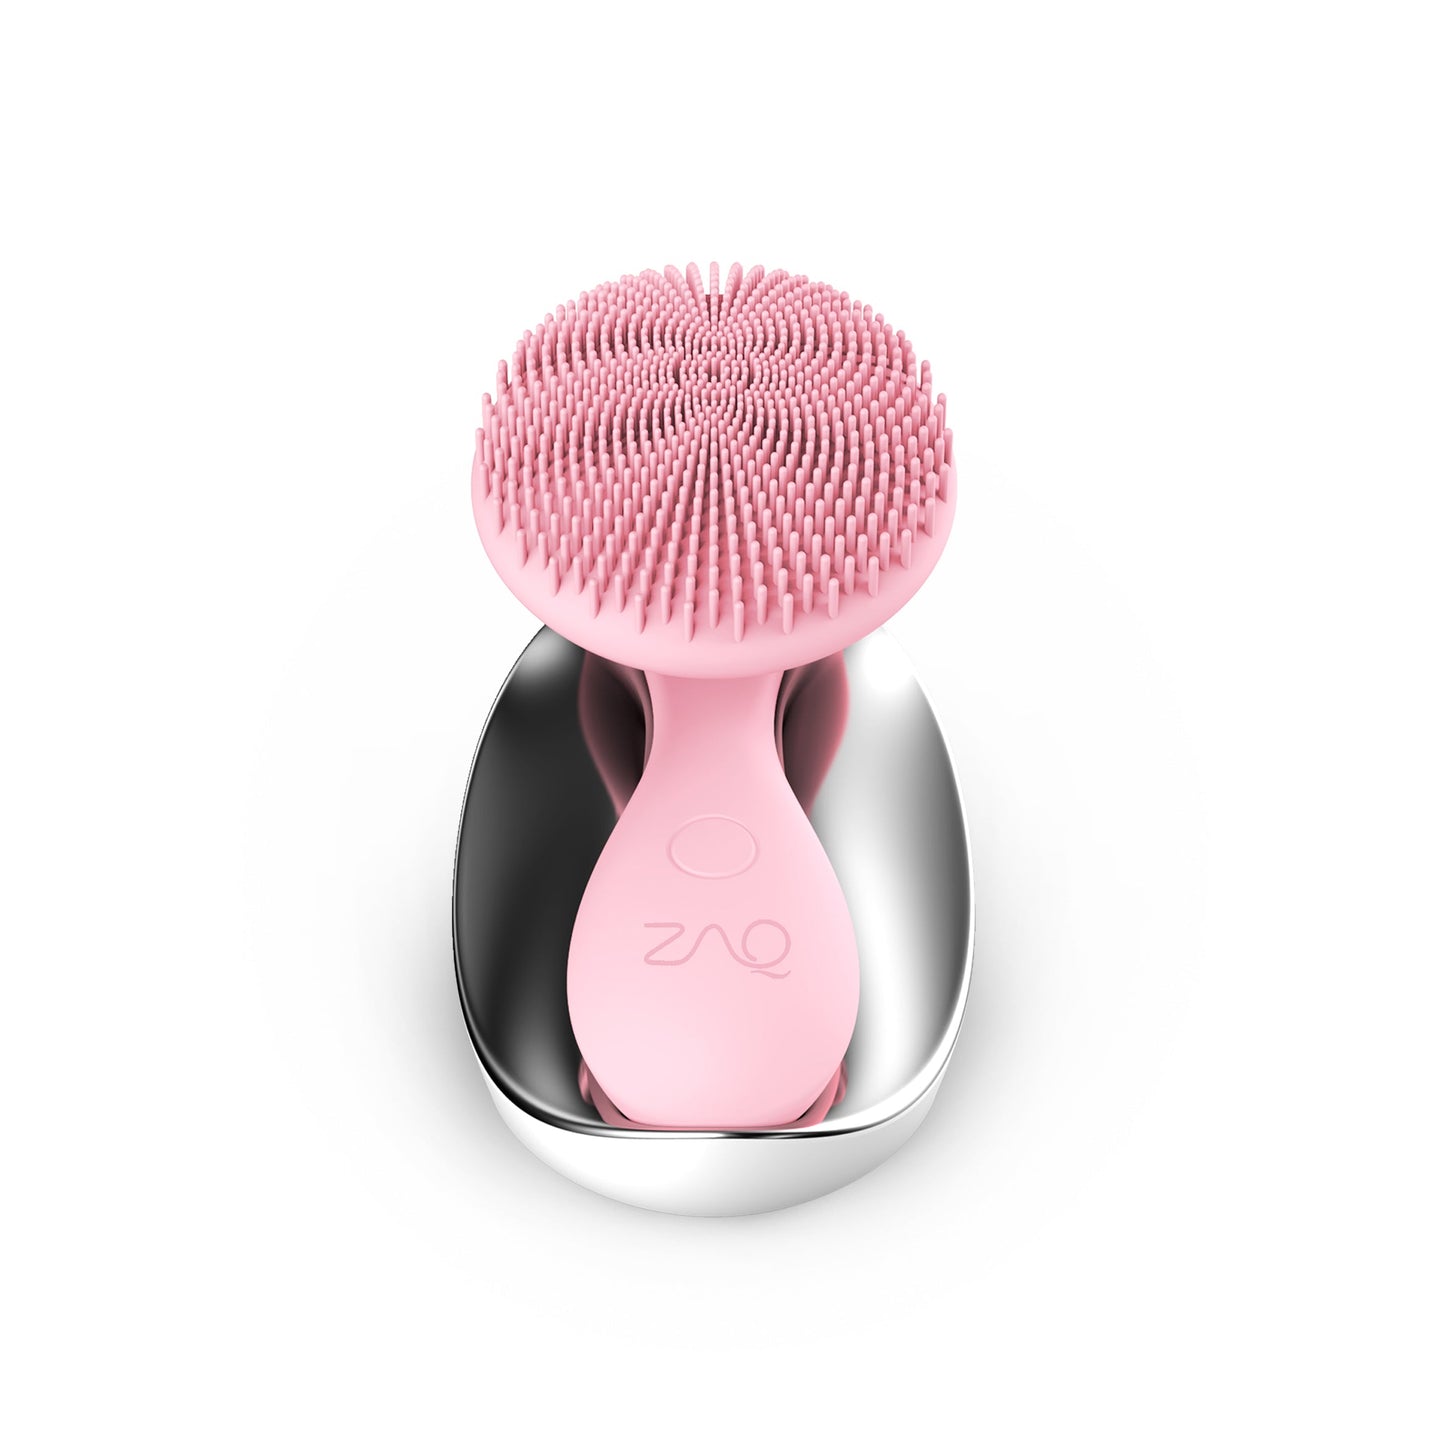 ZAQ TARA Sonic Vibrating Magnetic Beads Silicone Facial Cleansing Brush